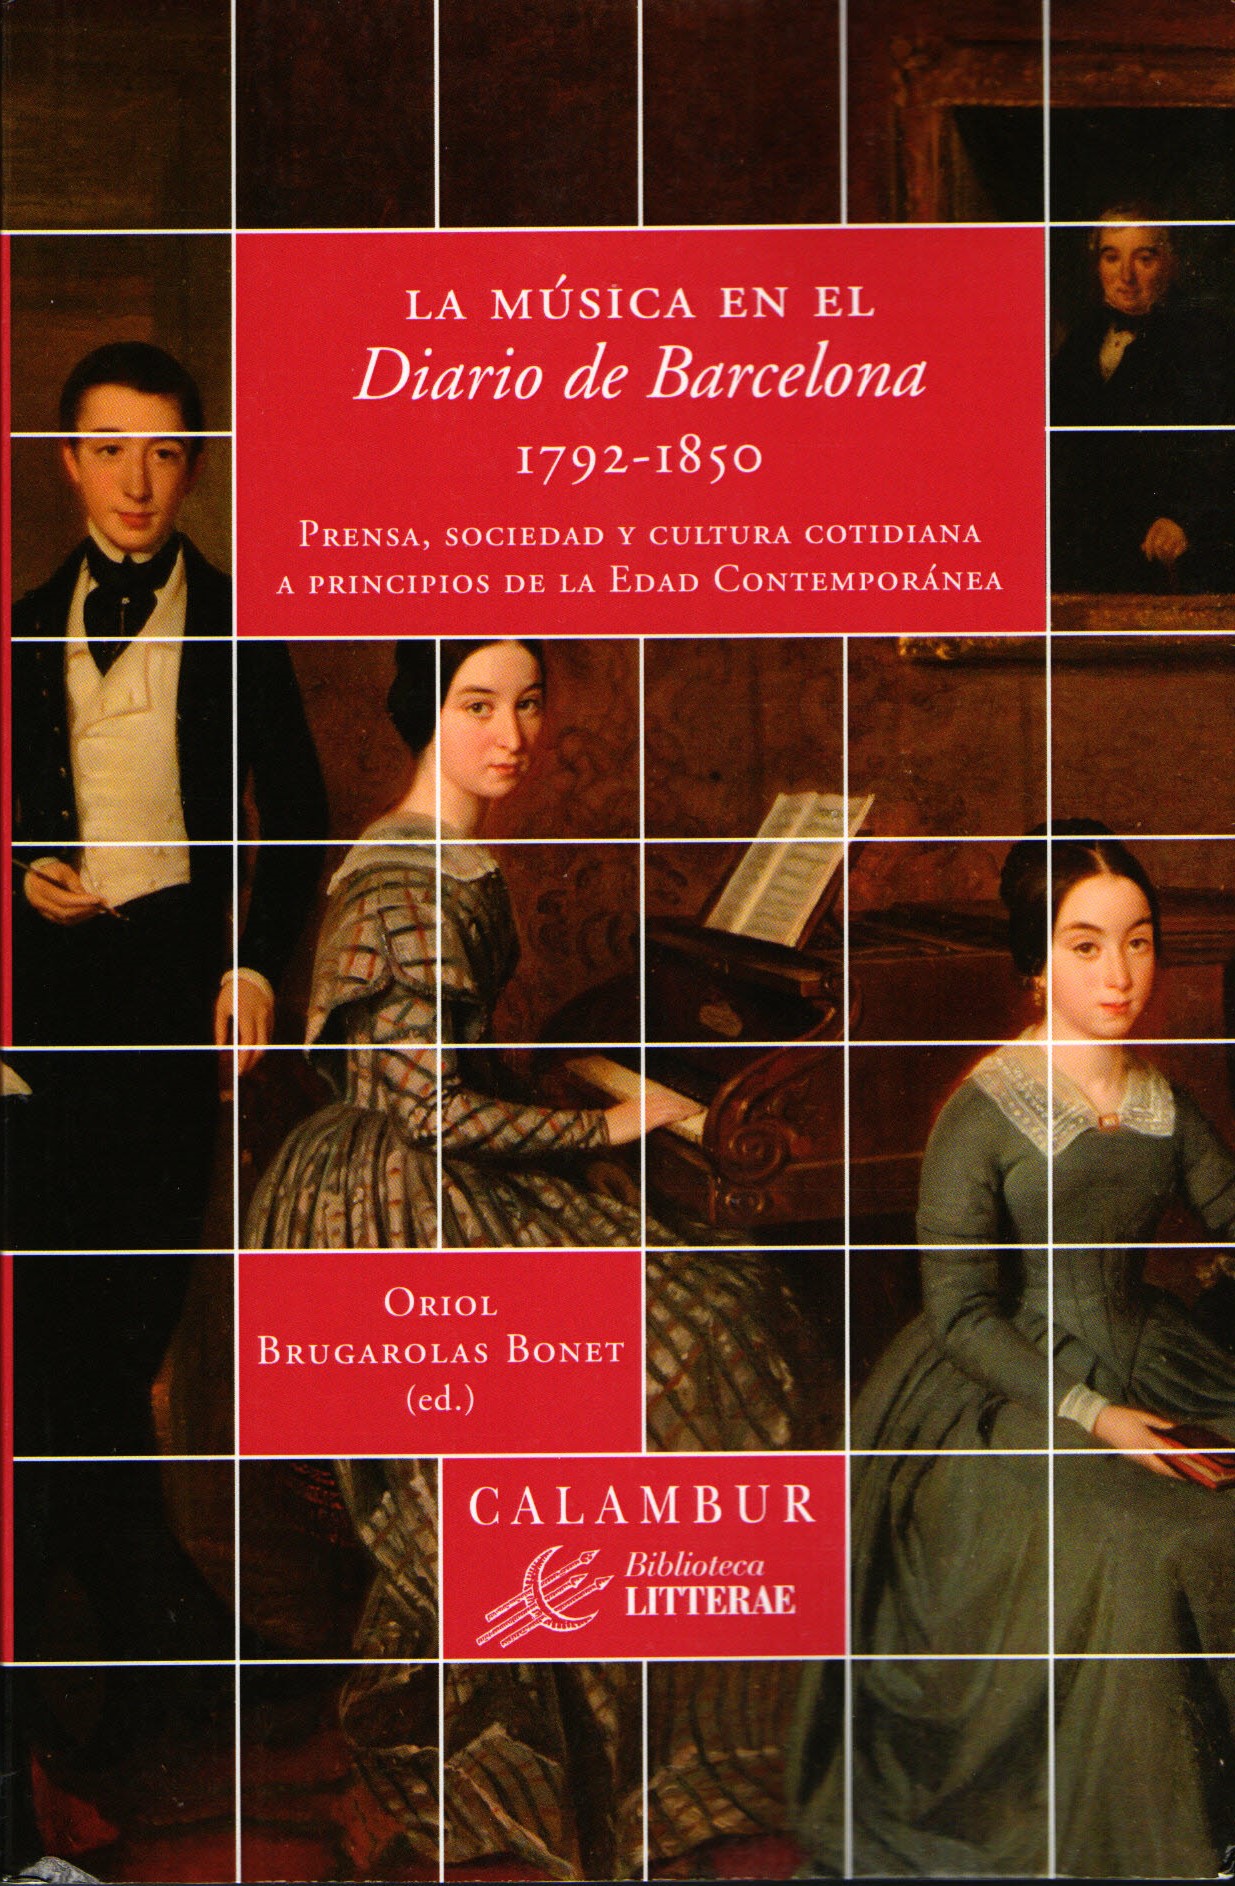 El Diario de Barcelona, 1792-1850 com a base de dades